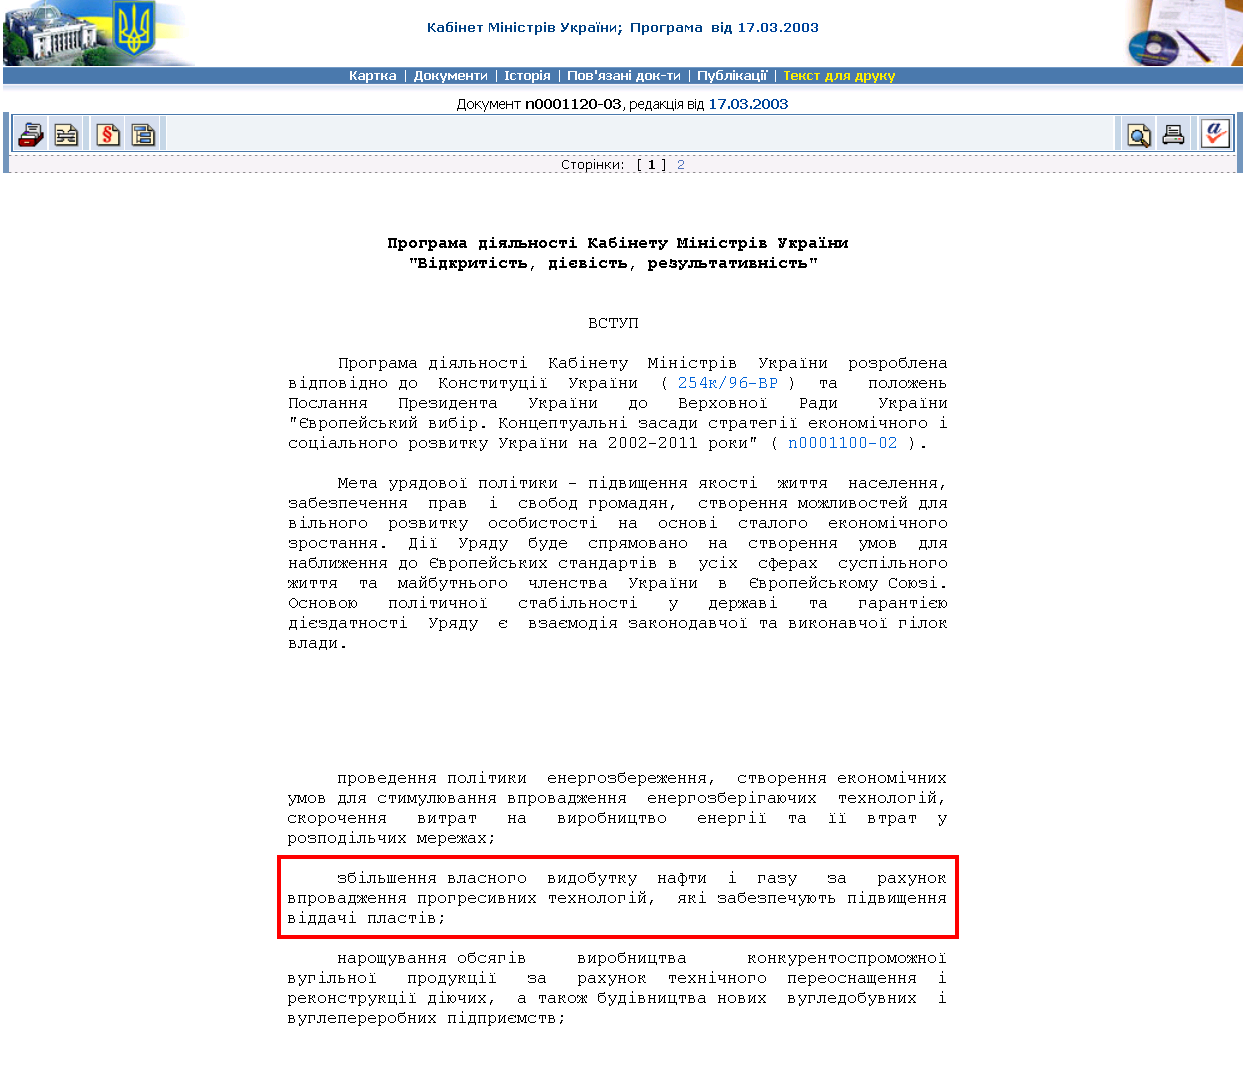 http://zakon.rada.gov.ua/cgi-bin/laws/main.cgi?page=2&nreg=n0001120-03